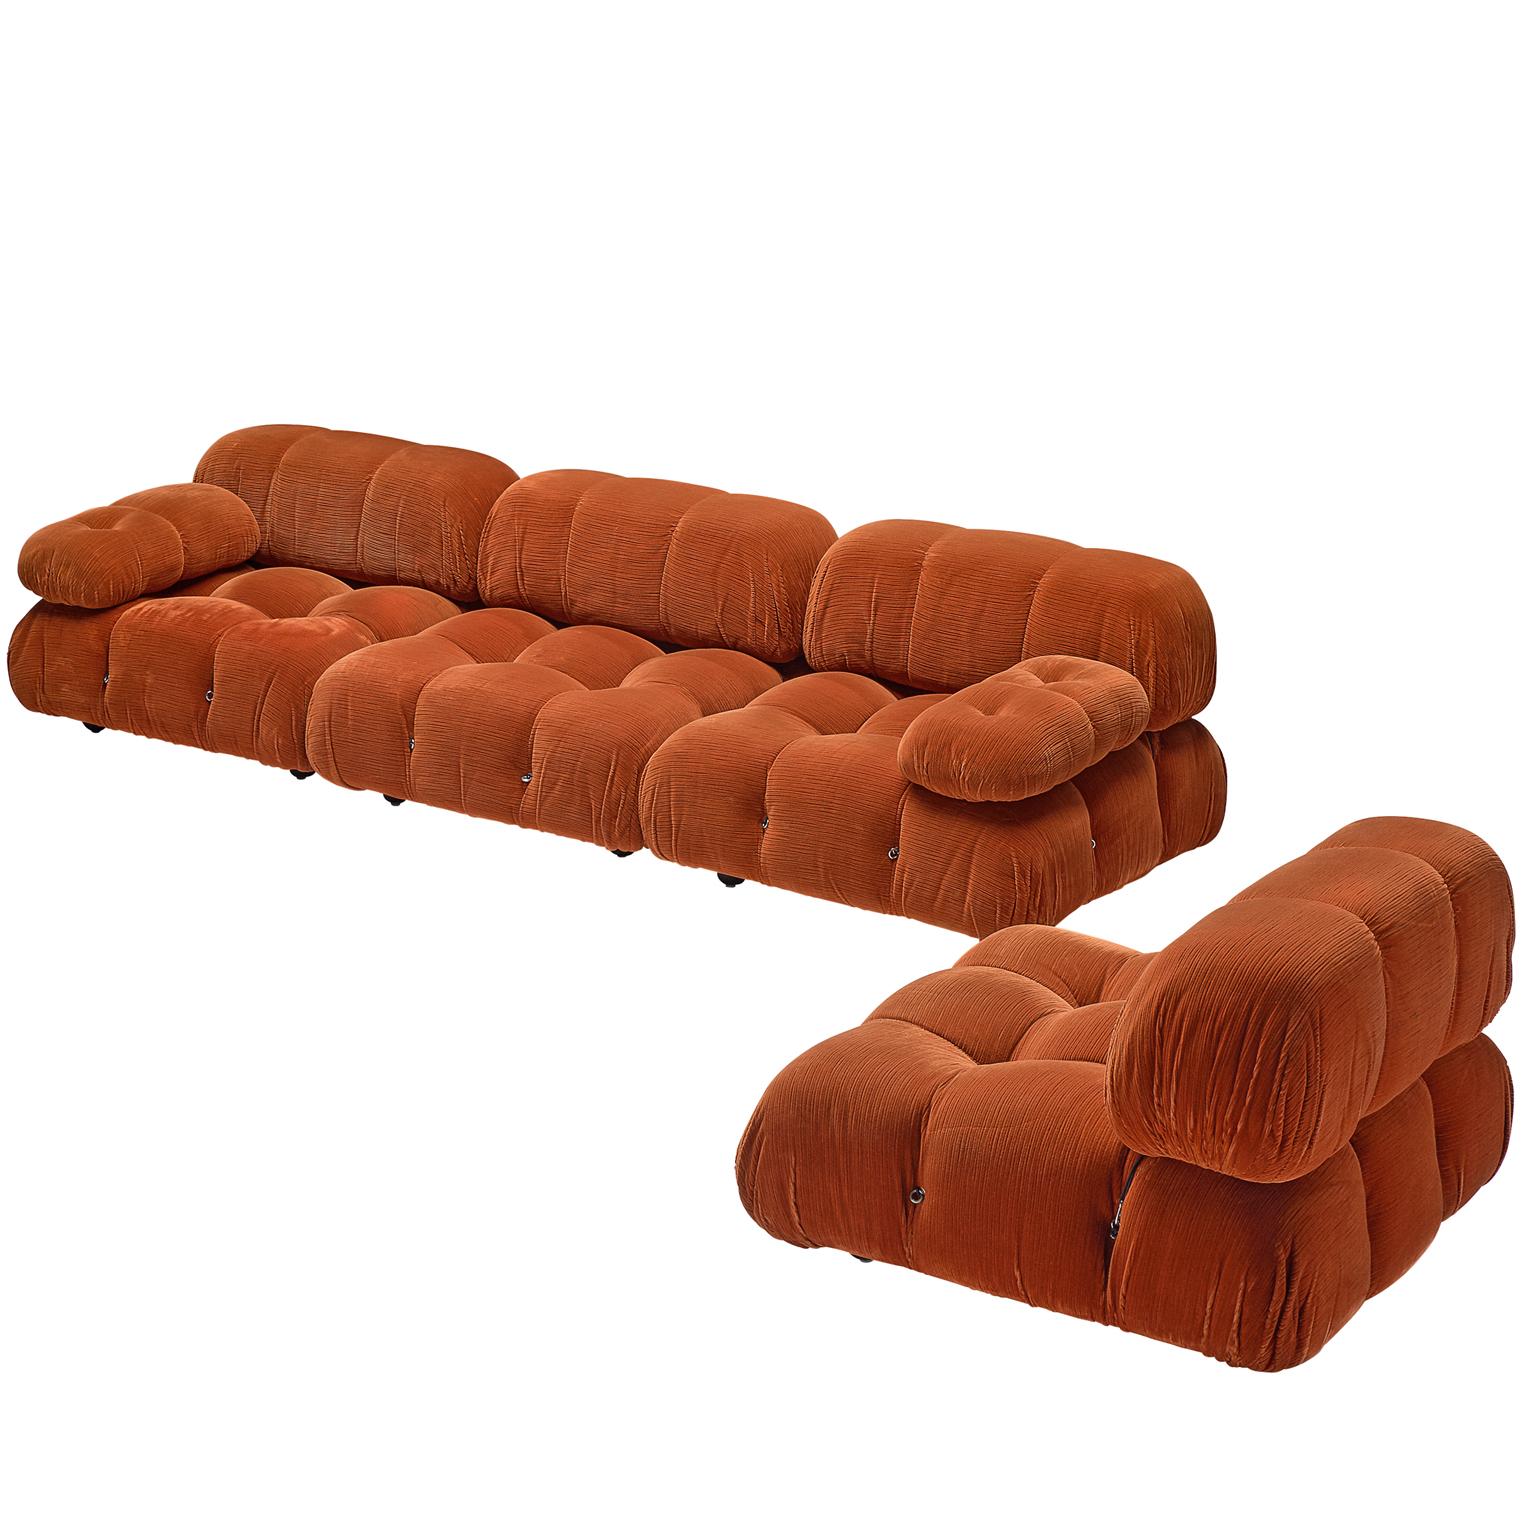 Mario Bellini 'Camaleonda' Orange Modular Sofa